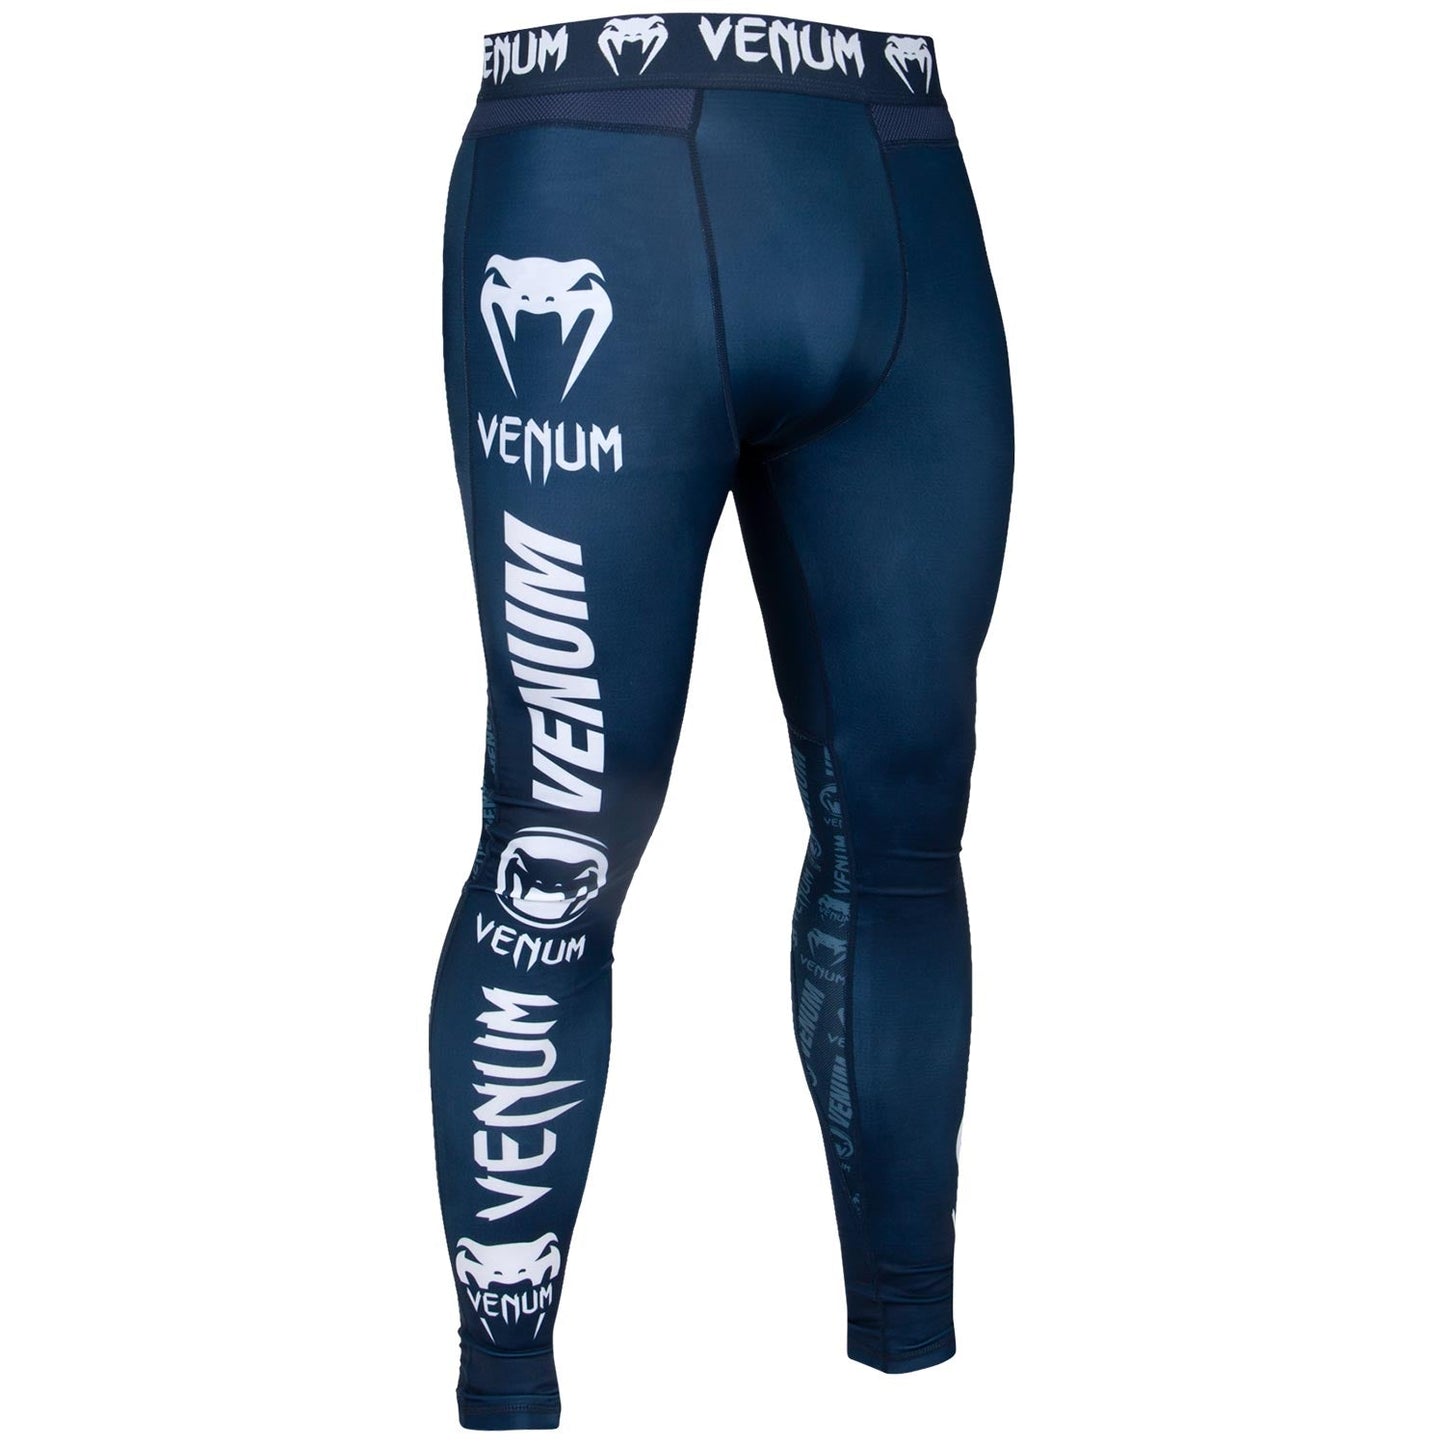 Venum Logos Tights - Navy Blue/White